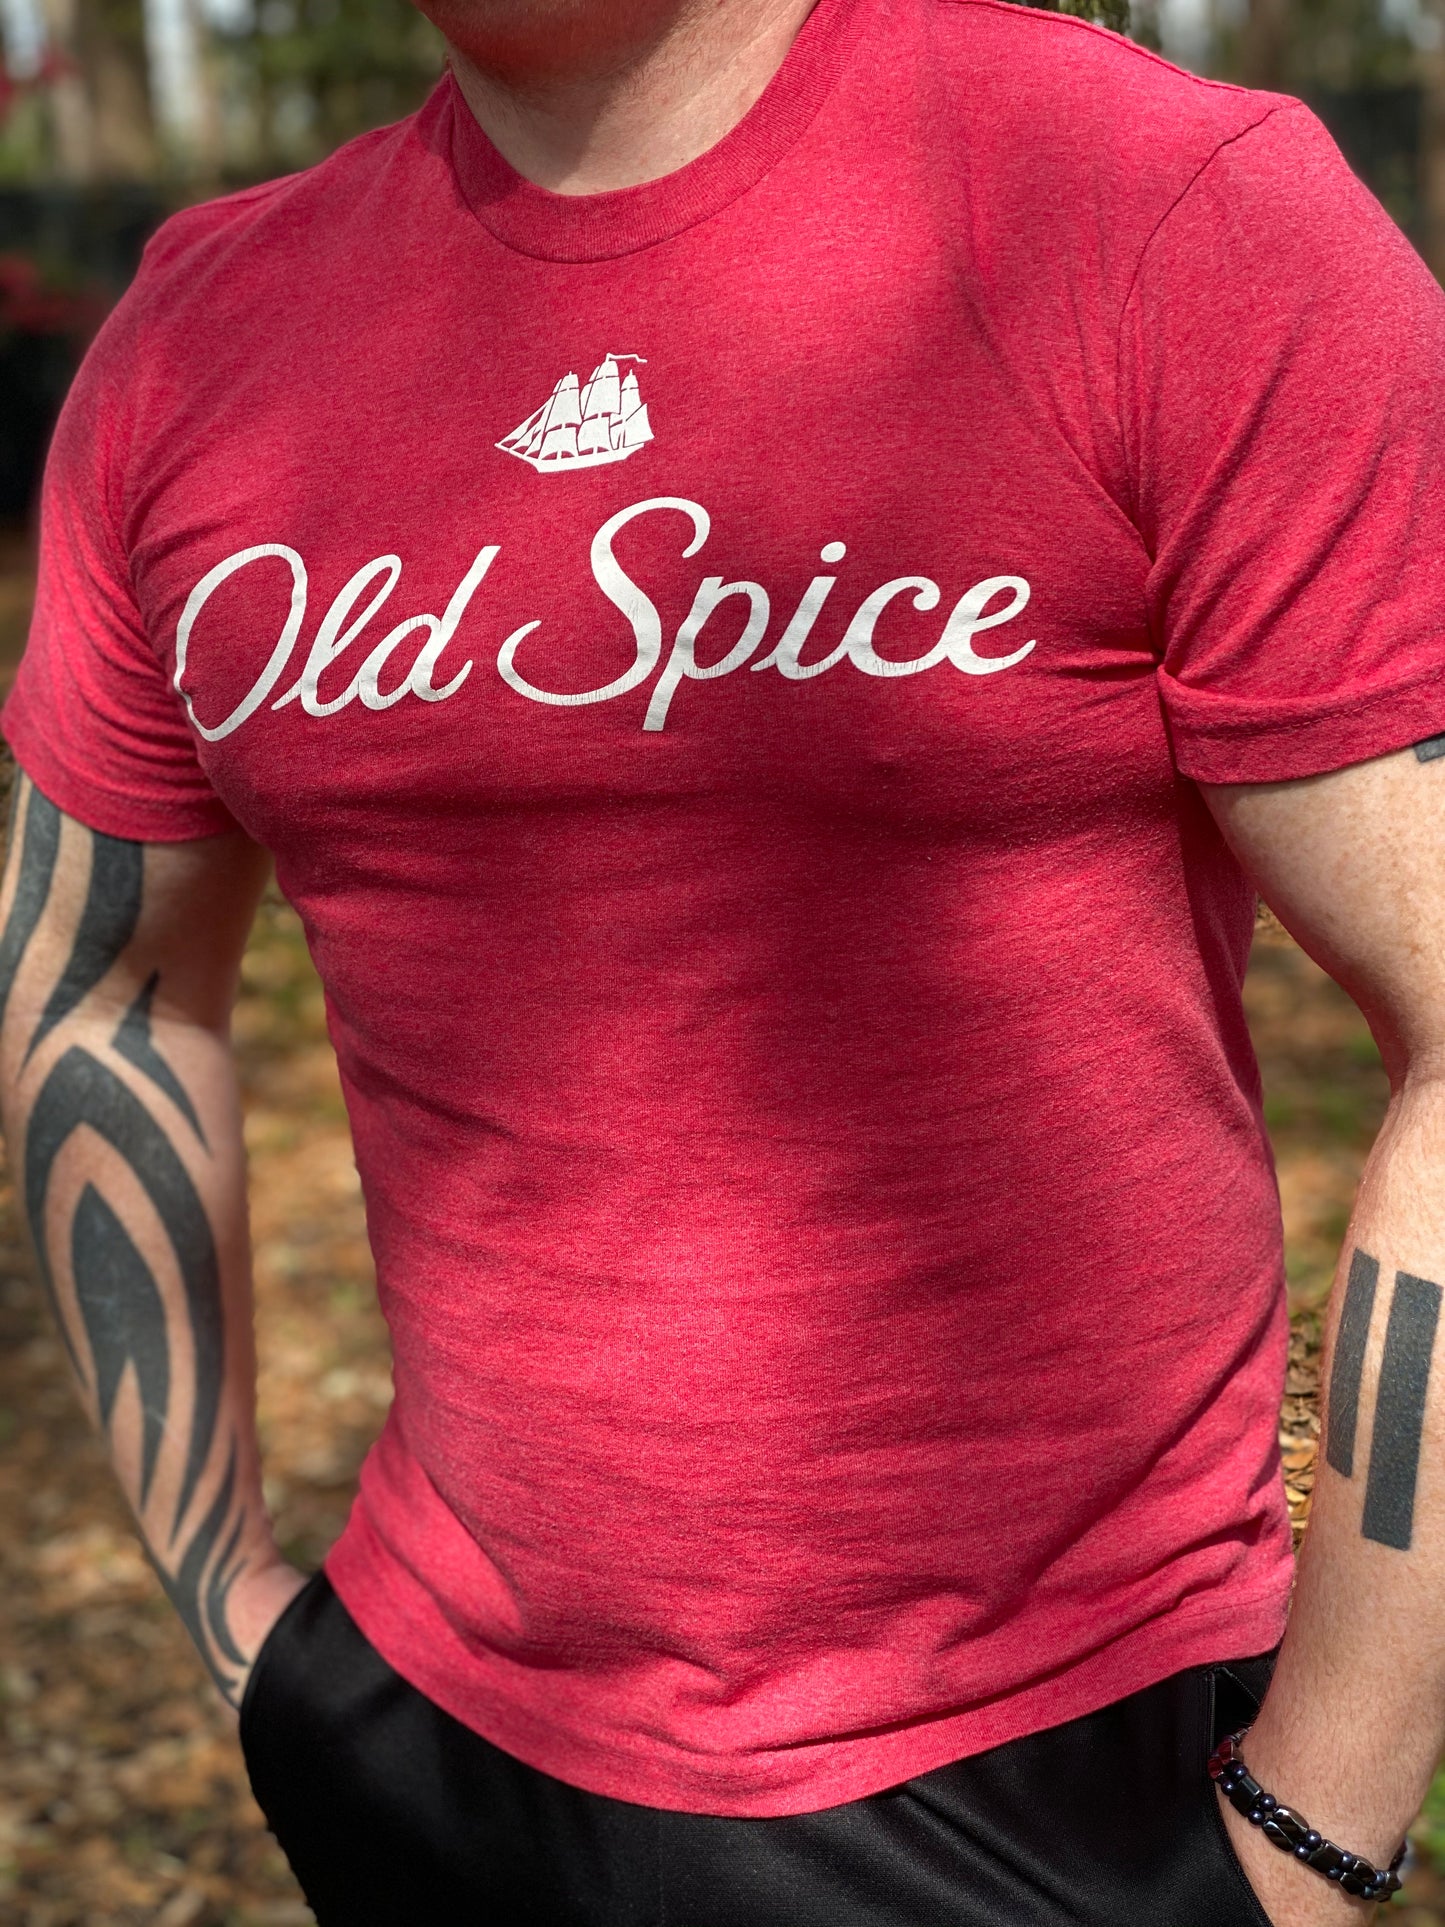 Old Spice (Retro T-Shirt)